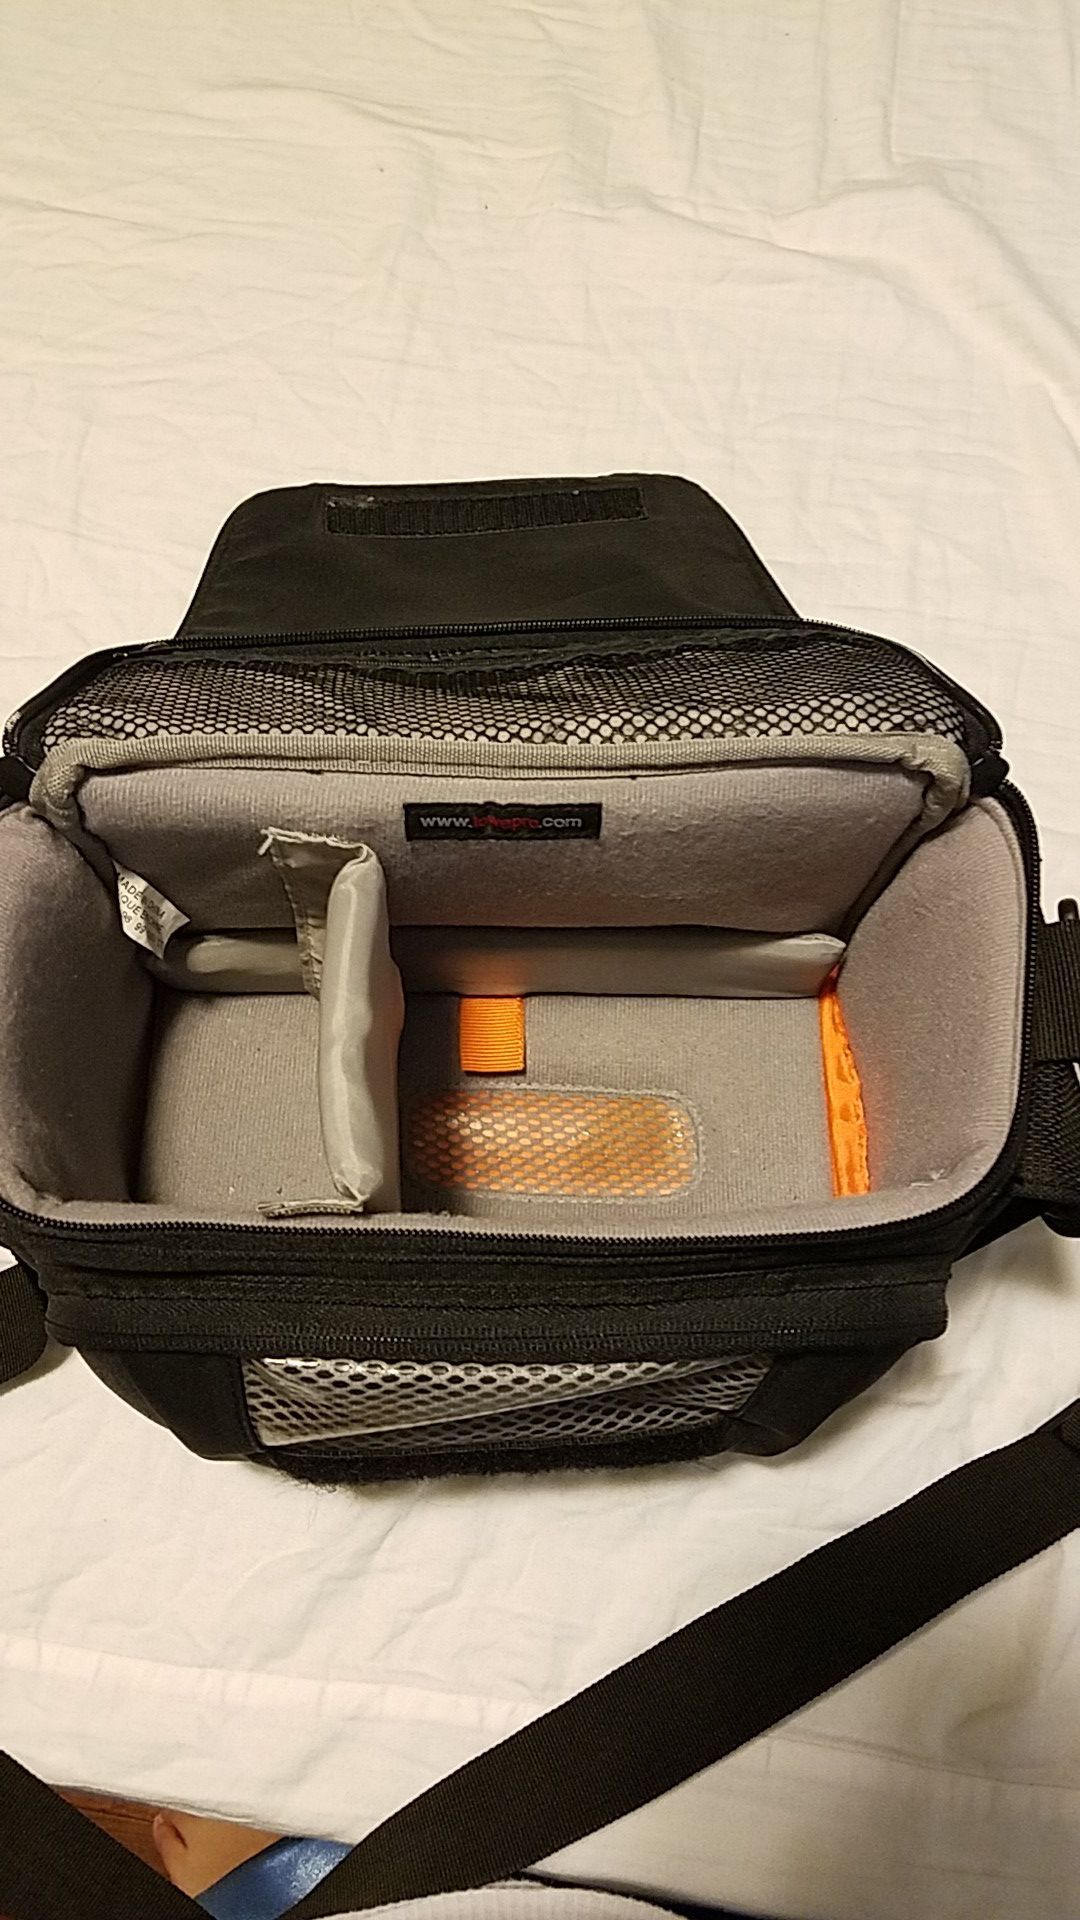 Lowepro camera bag